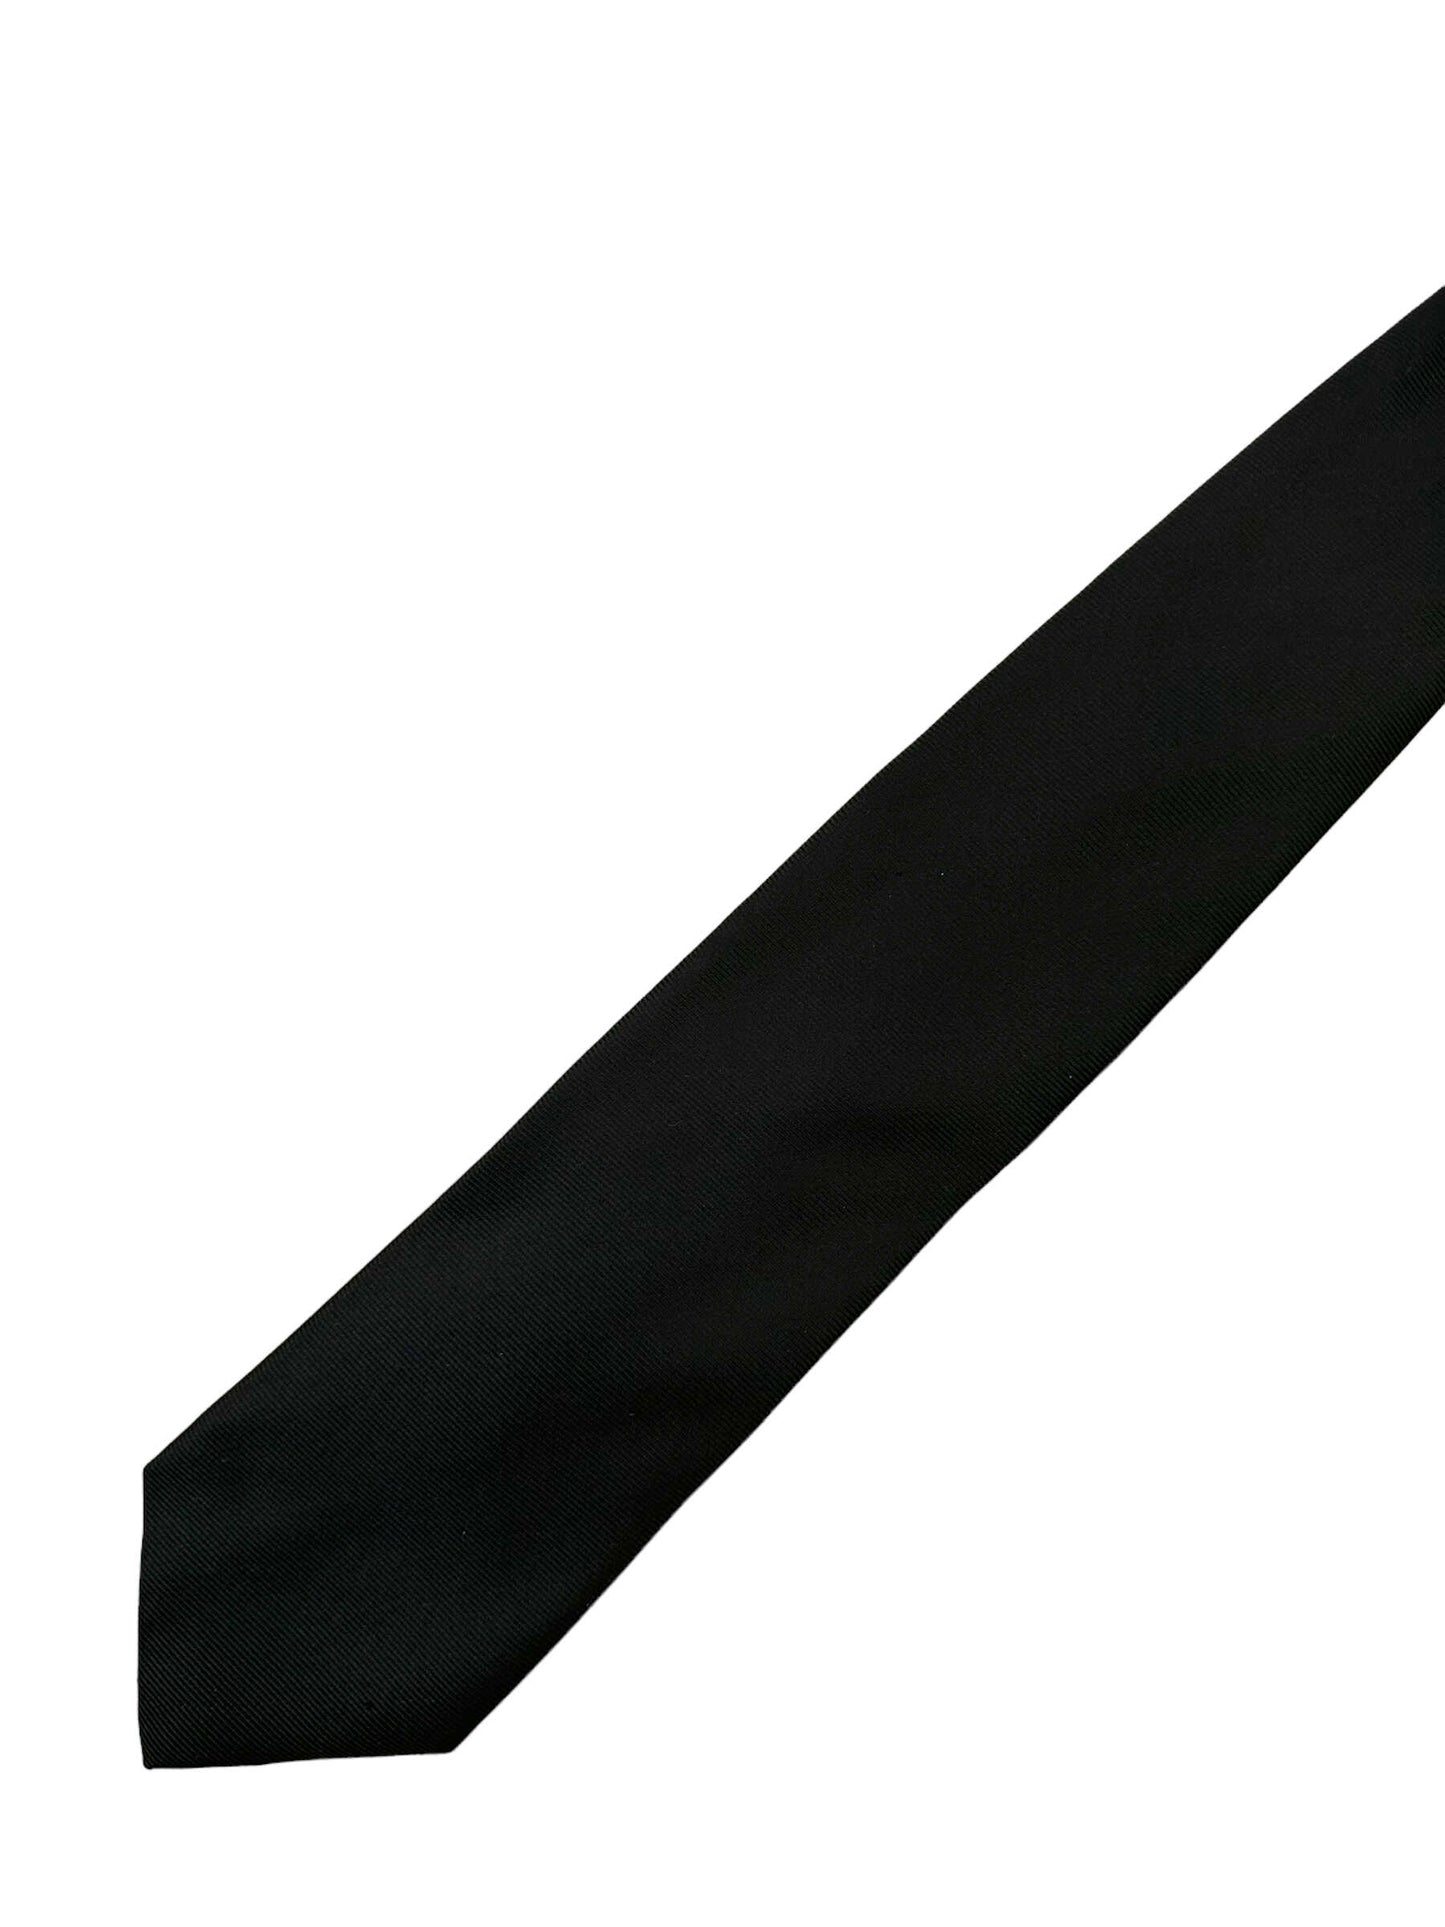 Ermenegildo Zegna Black Silk Tie - Genuine Design luxury consignment Calgary, Alberta, Canada New & pre-owned clothing, shoes, accessories.